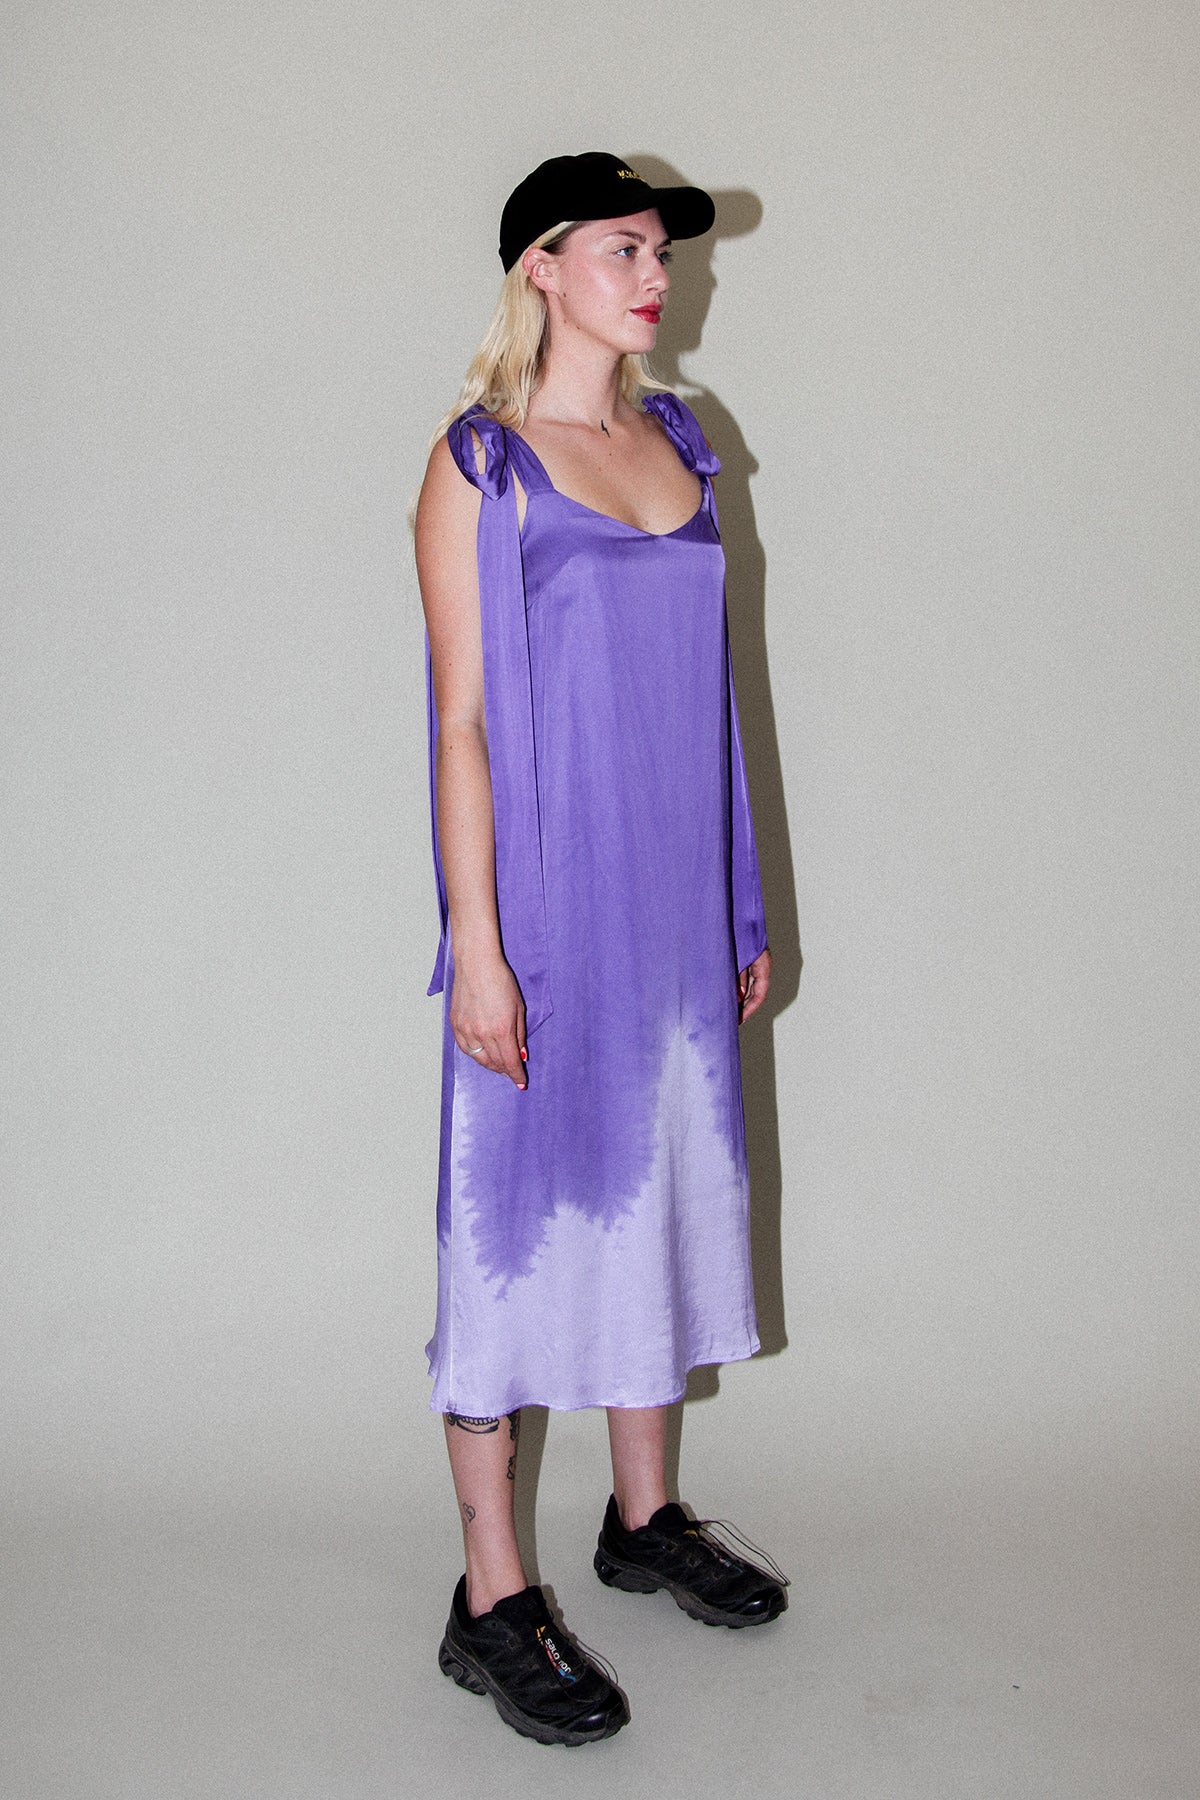 Dipped Slip Dress in Iris Dip Dye